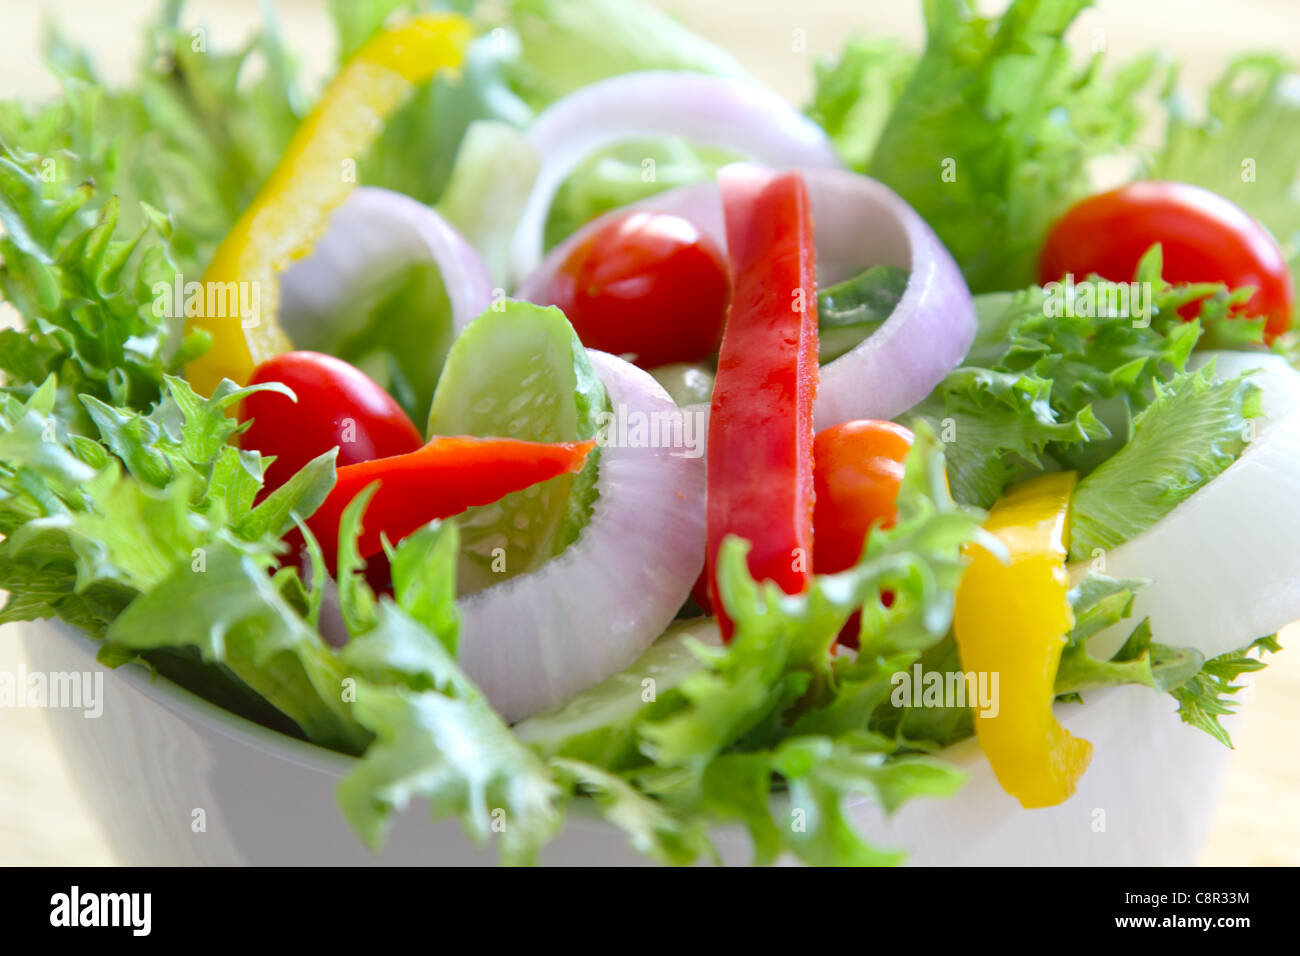 Healthy salad Stock Photo